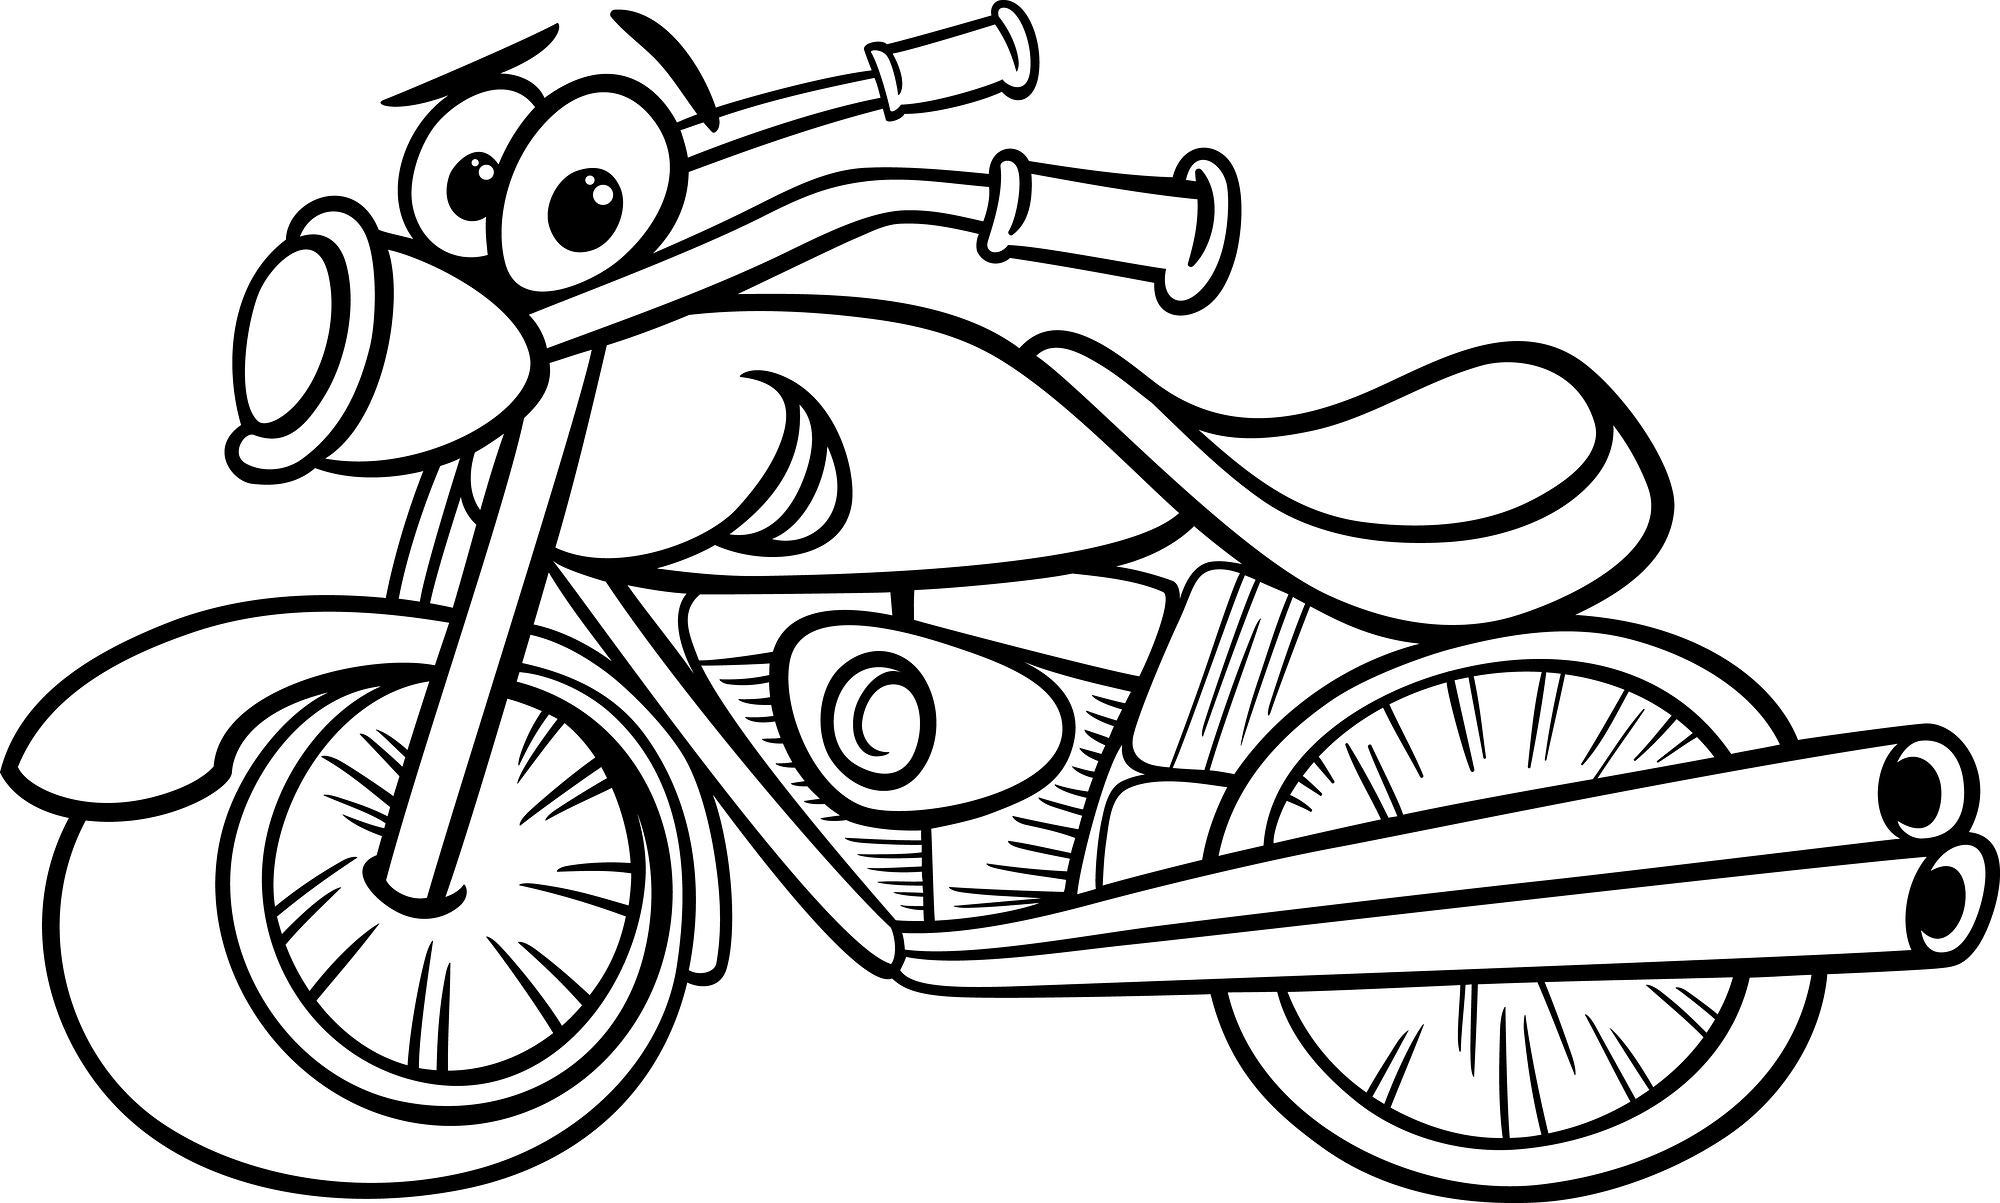 Click to see printable version of Motocicleta de Dibujos Animados Coloring page